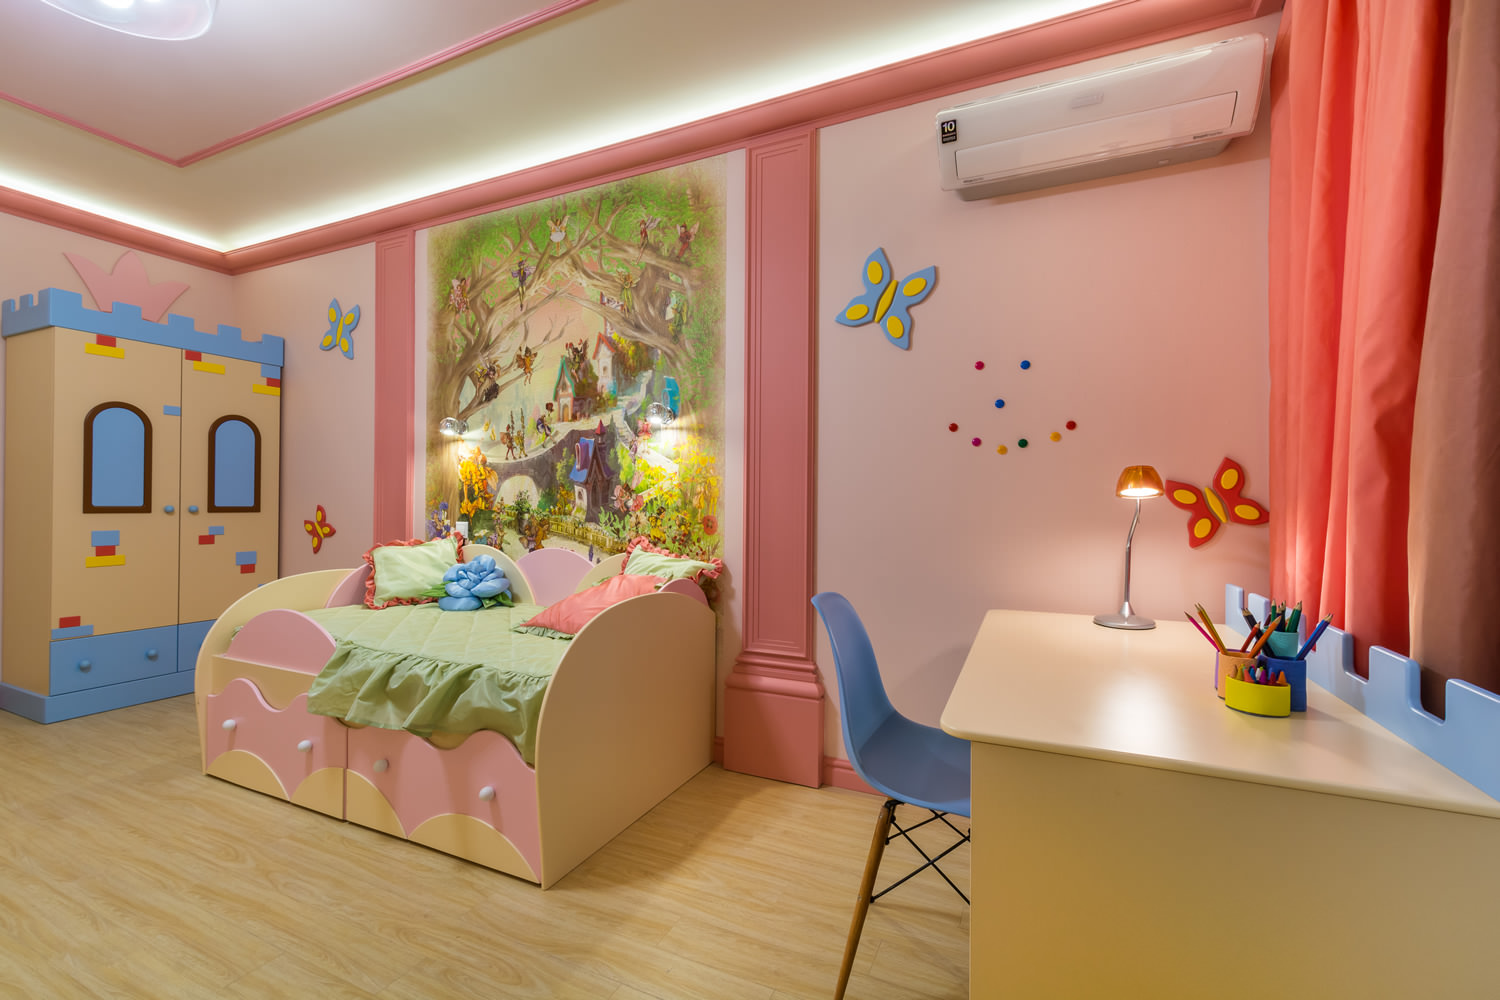 Рисунок и наклейки на стене в детской комнате девочки